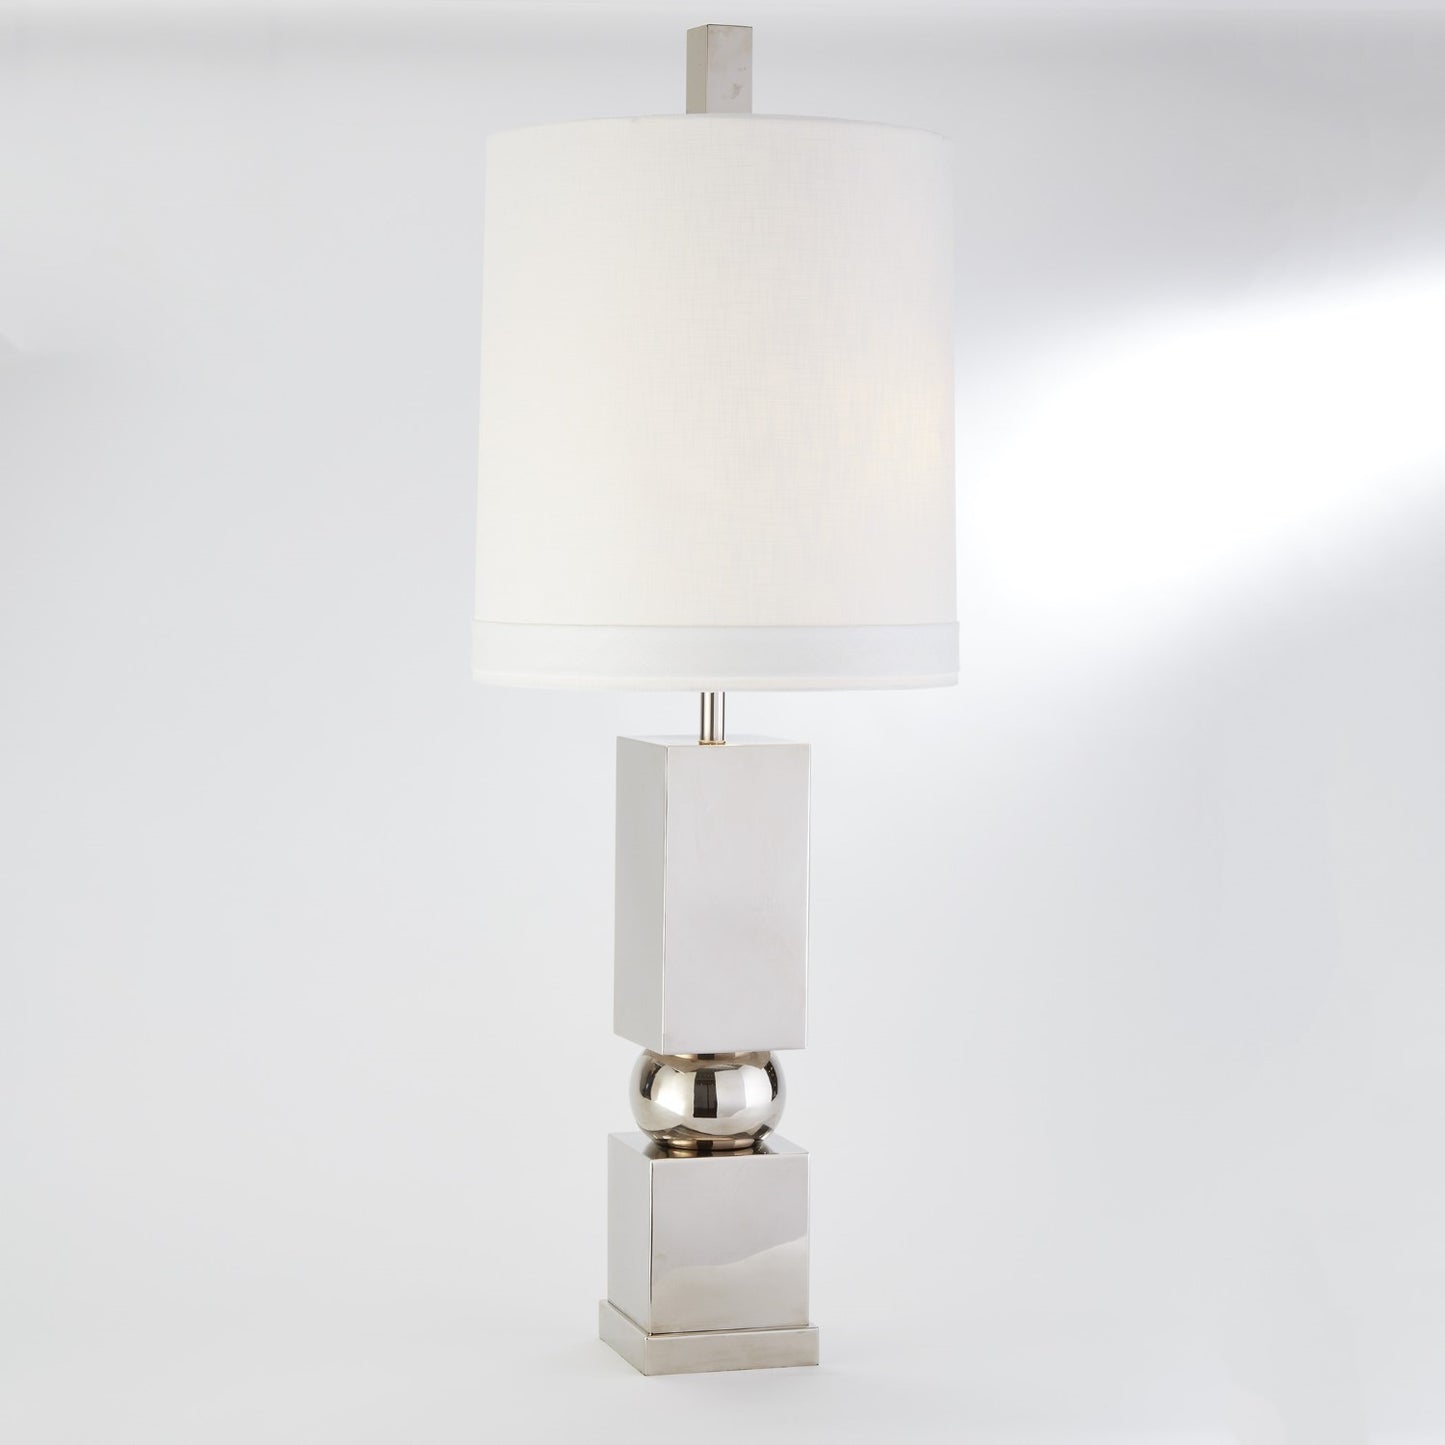 Squeeze Table Lamp - Nickel - Grats Decor Interior Design & Build Inc.